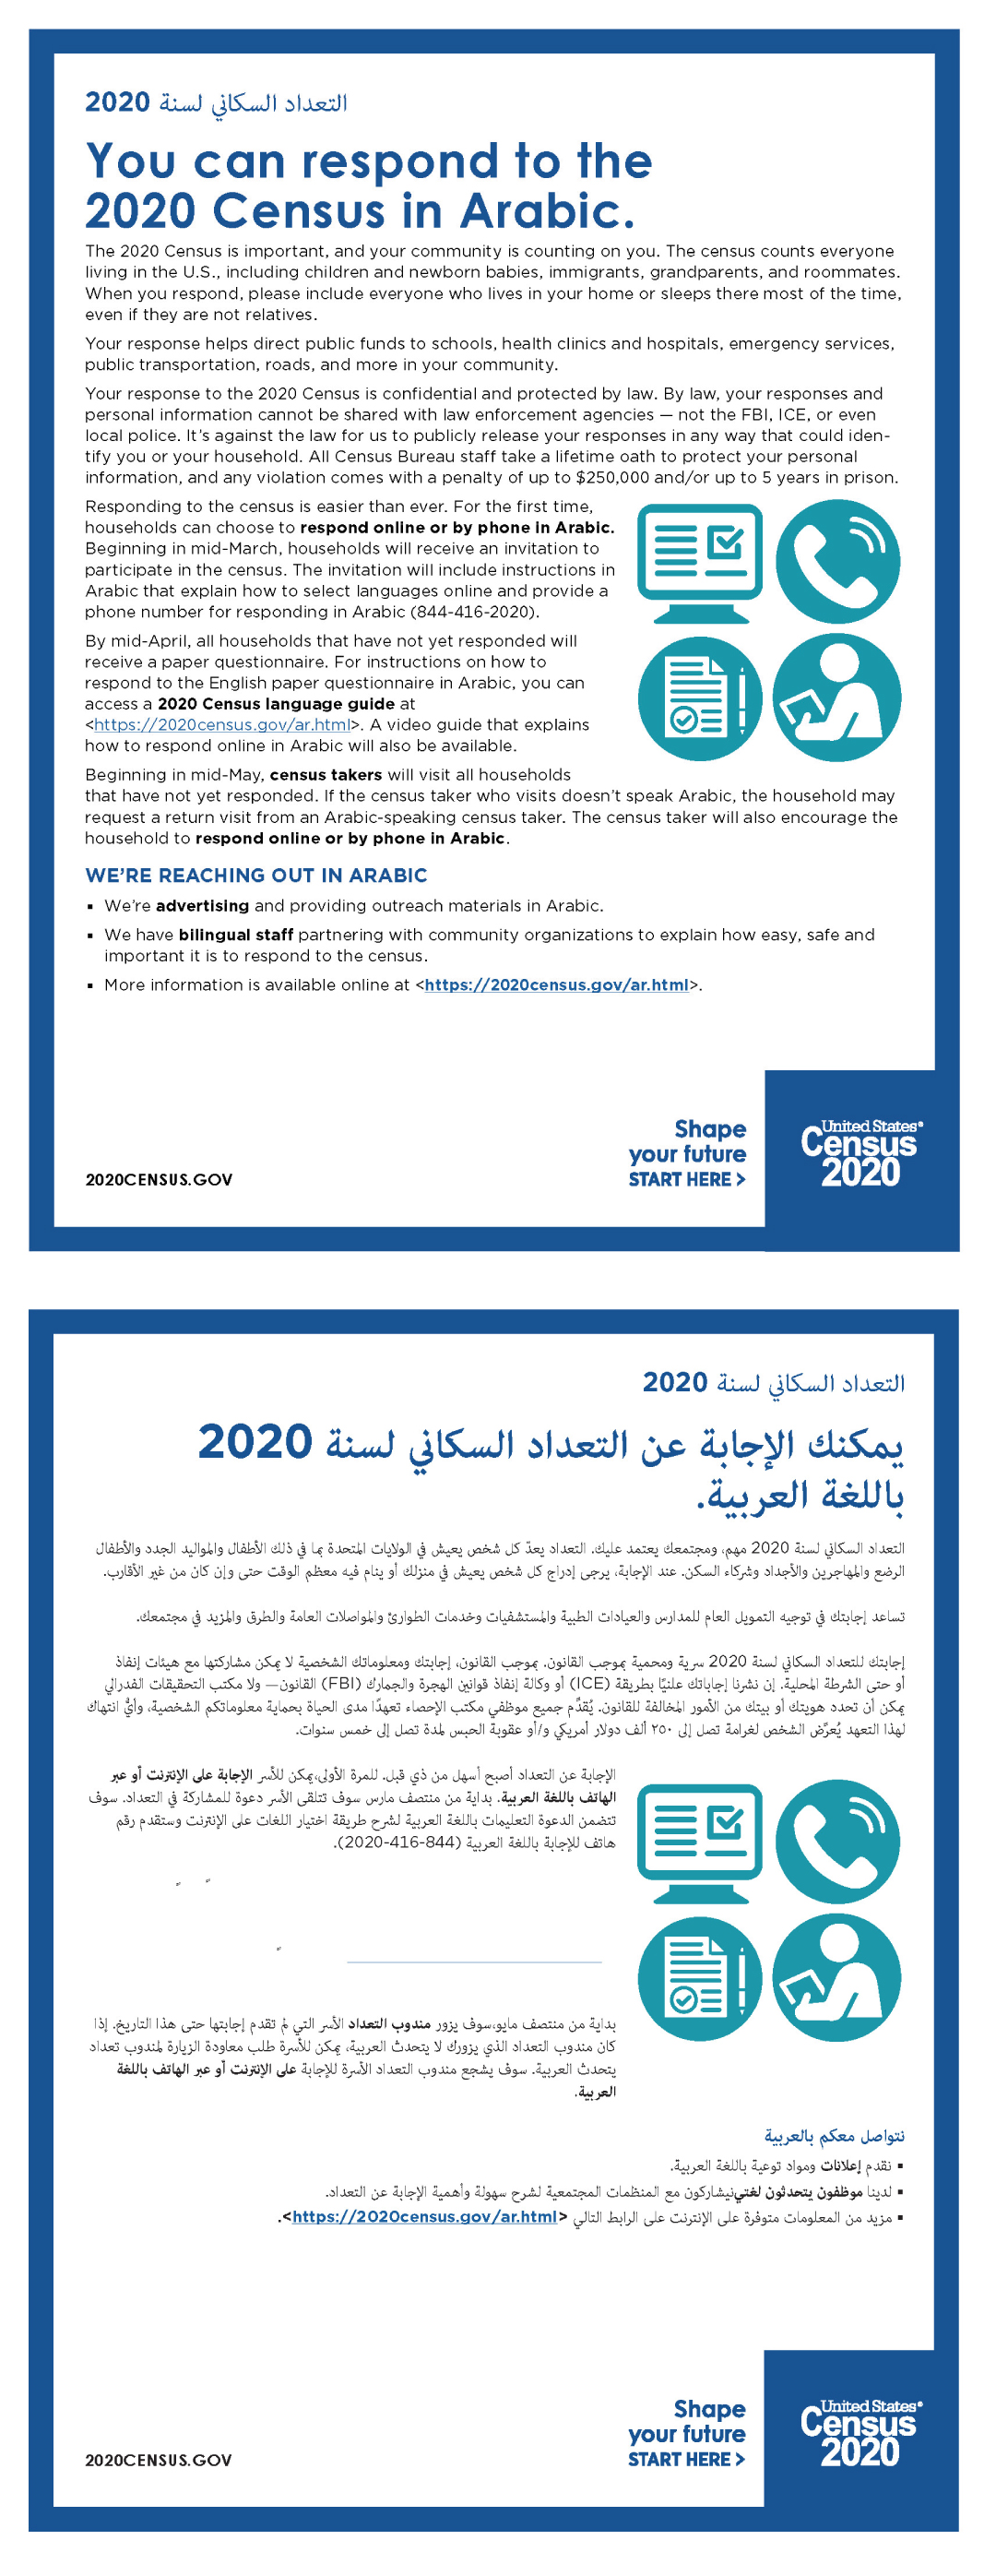 You can respond to the 2020 Census in Arabic. (ﻳﻤﻜﻨﻚ اﻹﺟﺎﺑﺔ ﻋﻦ اﻟﺘﻌﺪاد اﻟﺴﻜﺎني ﻟﺴﻨﺔ2020 ﺑﺎﻟﻠﻐﺔ اﻟﻌﺮﺑﻴﺔ.)